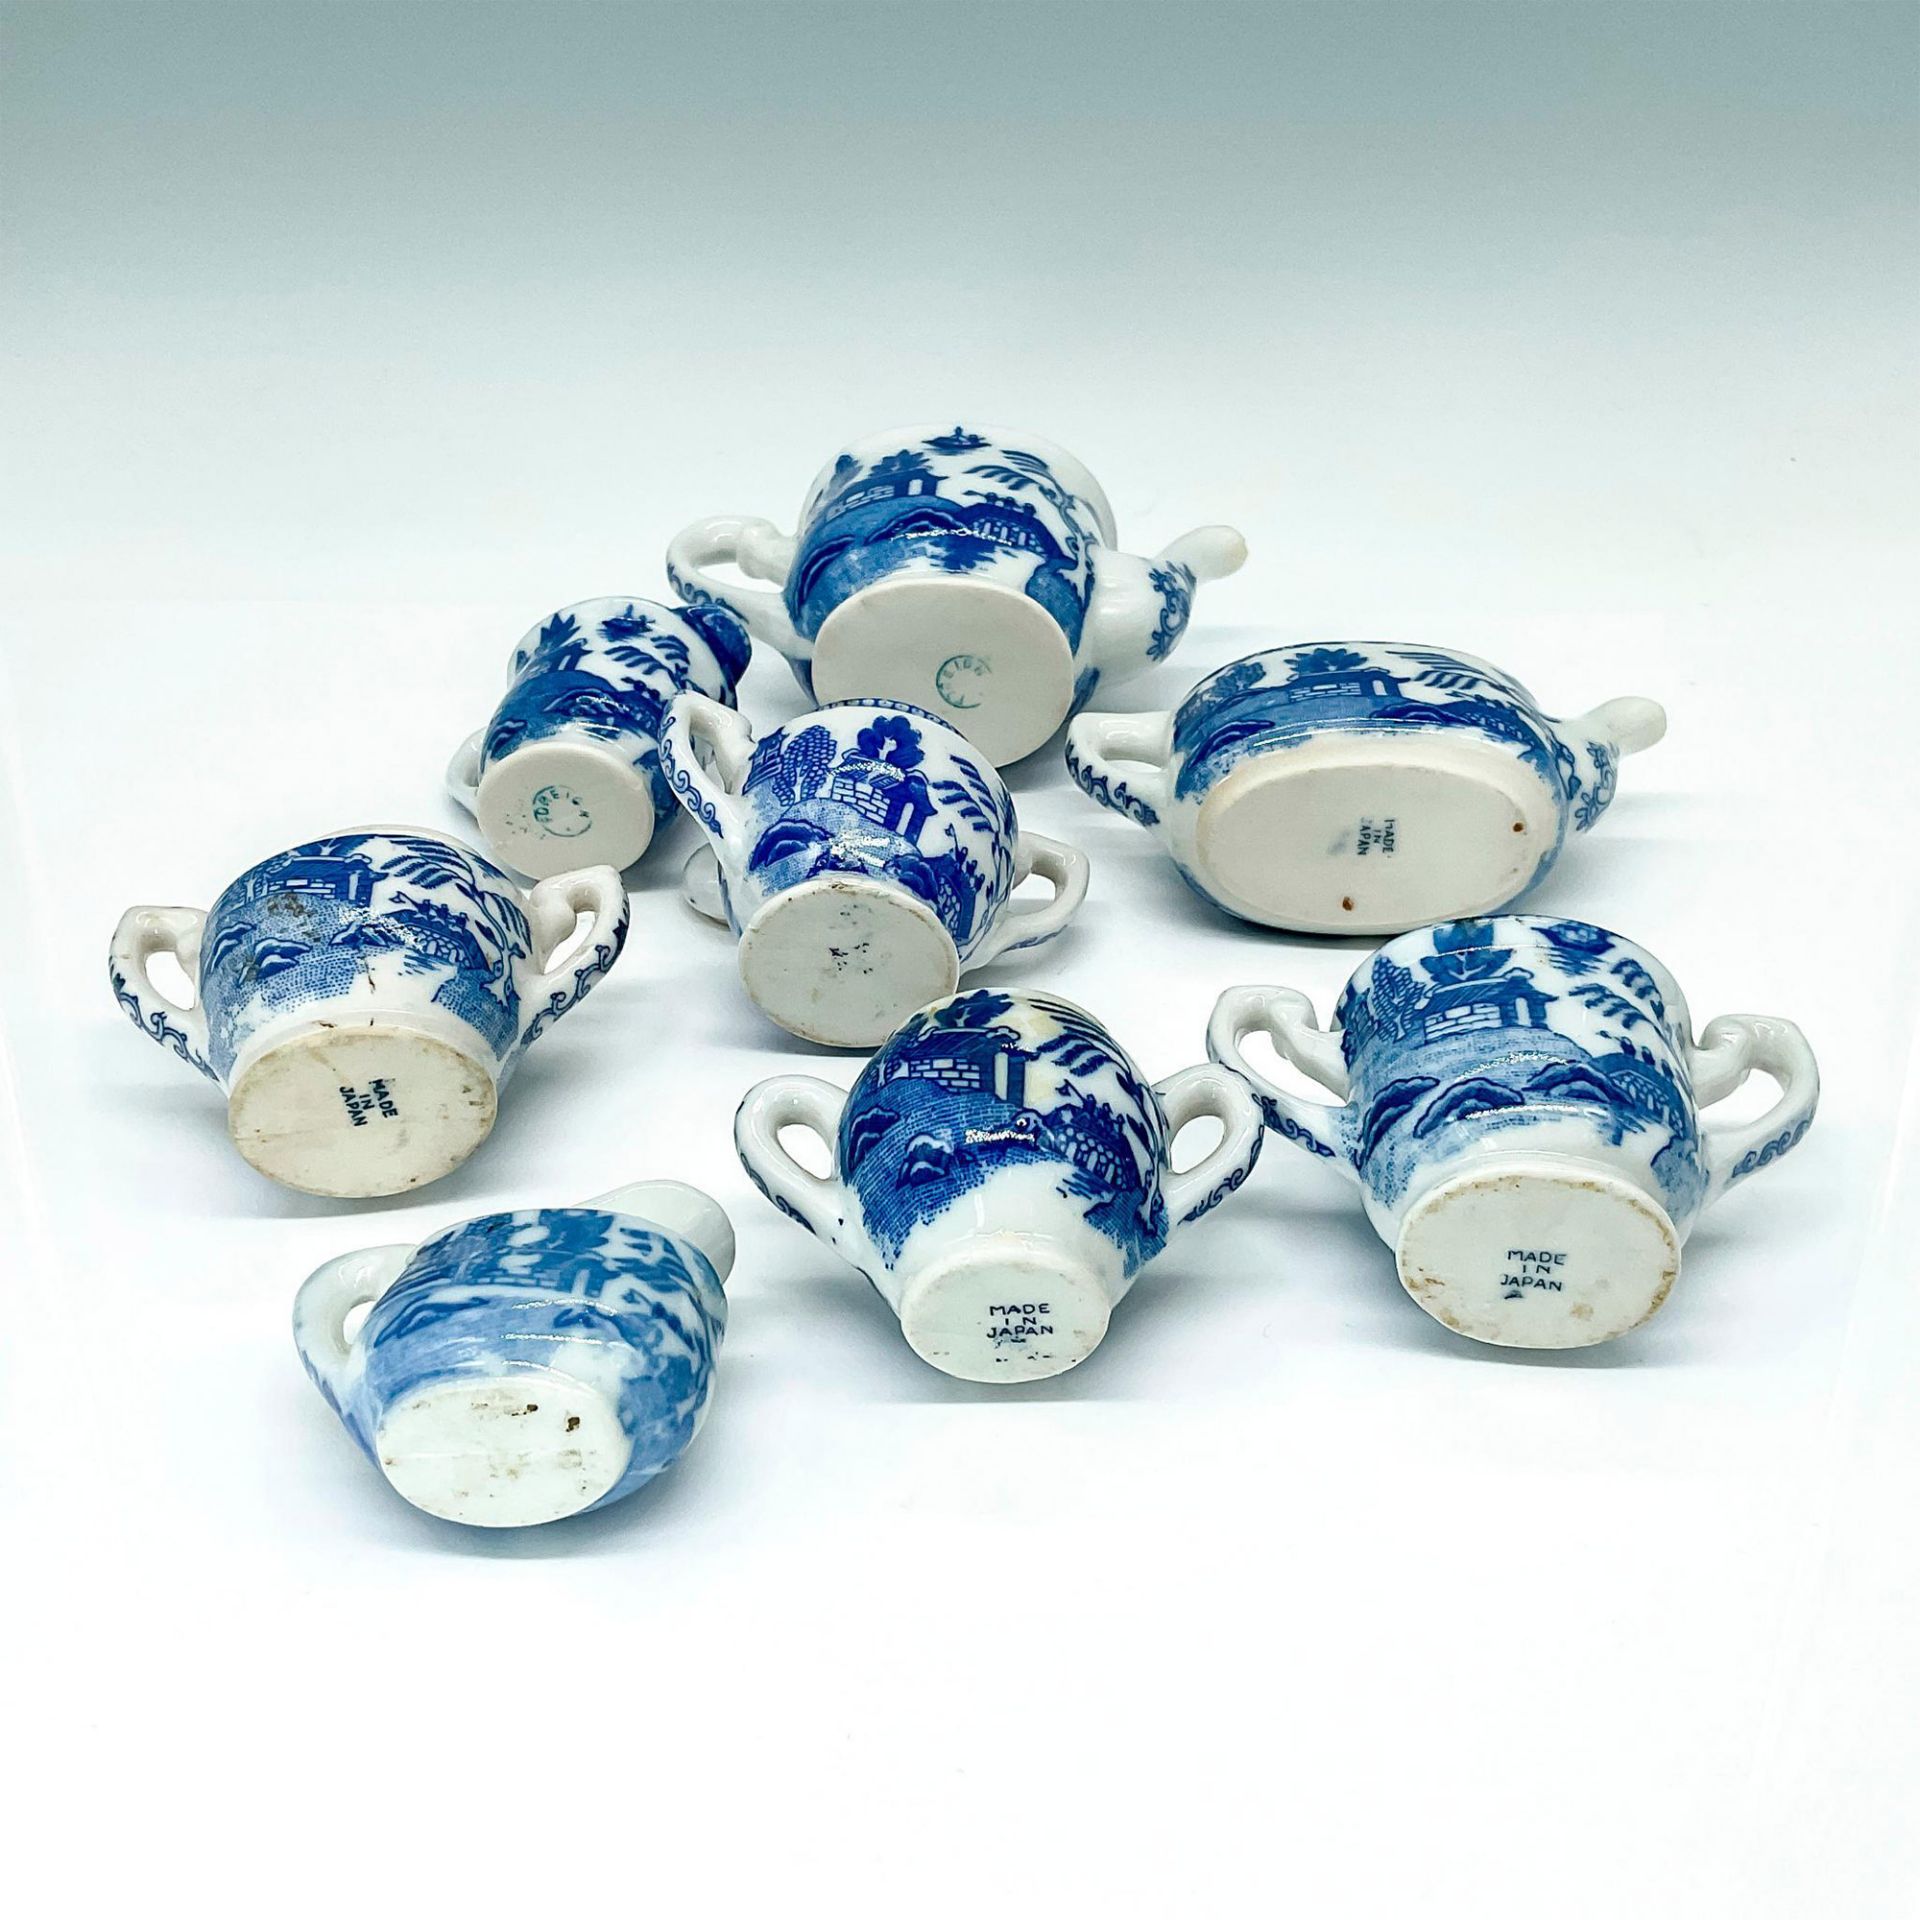 8pc Blue Willow Child's Tea Set Tea Pots and Serving Pieces - Image 3 of 3